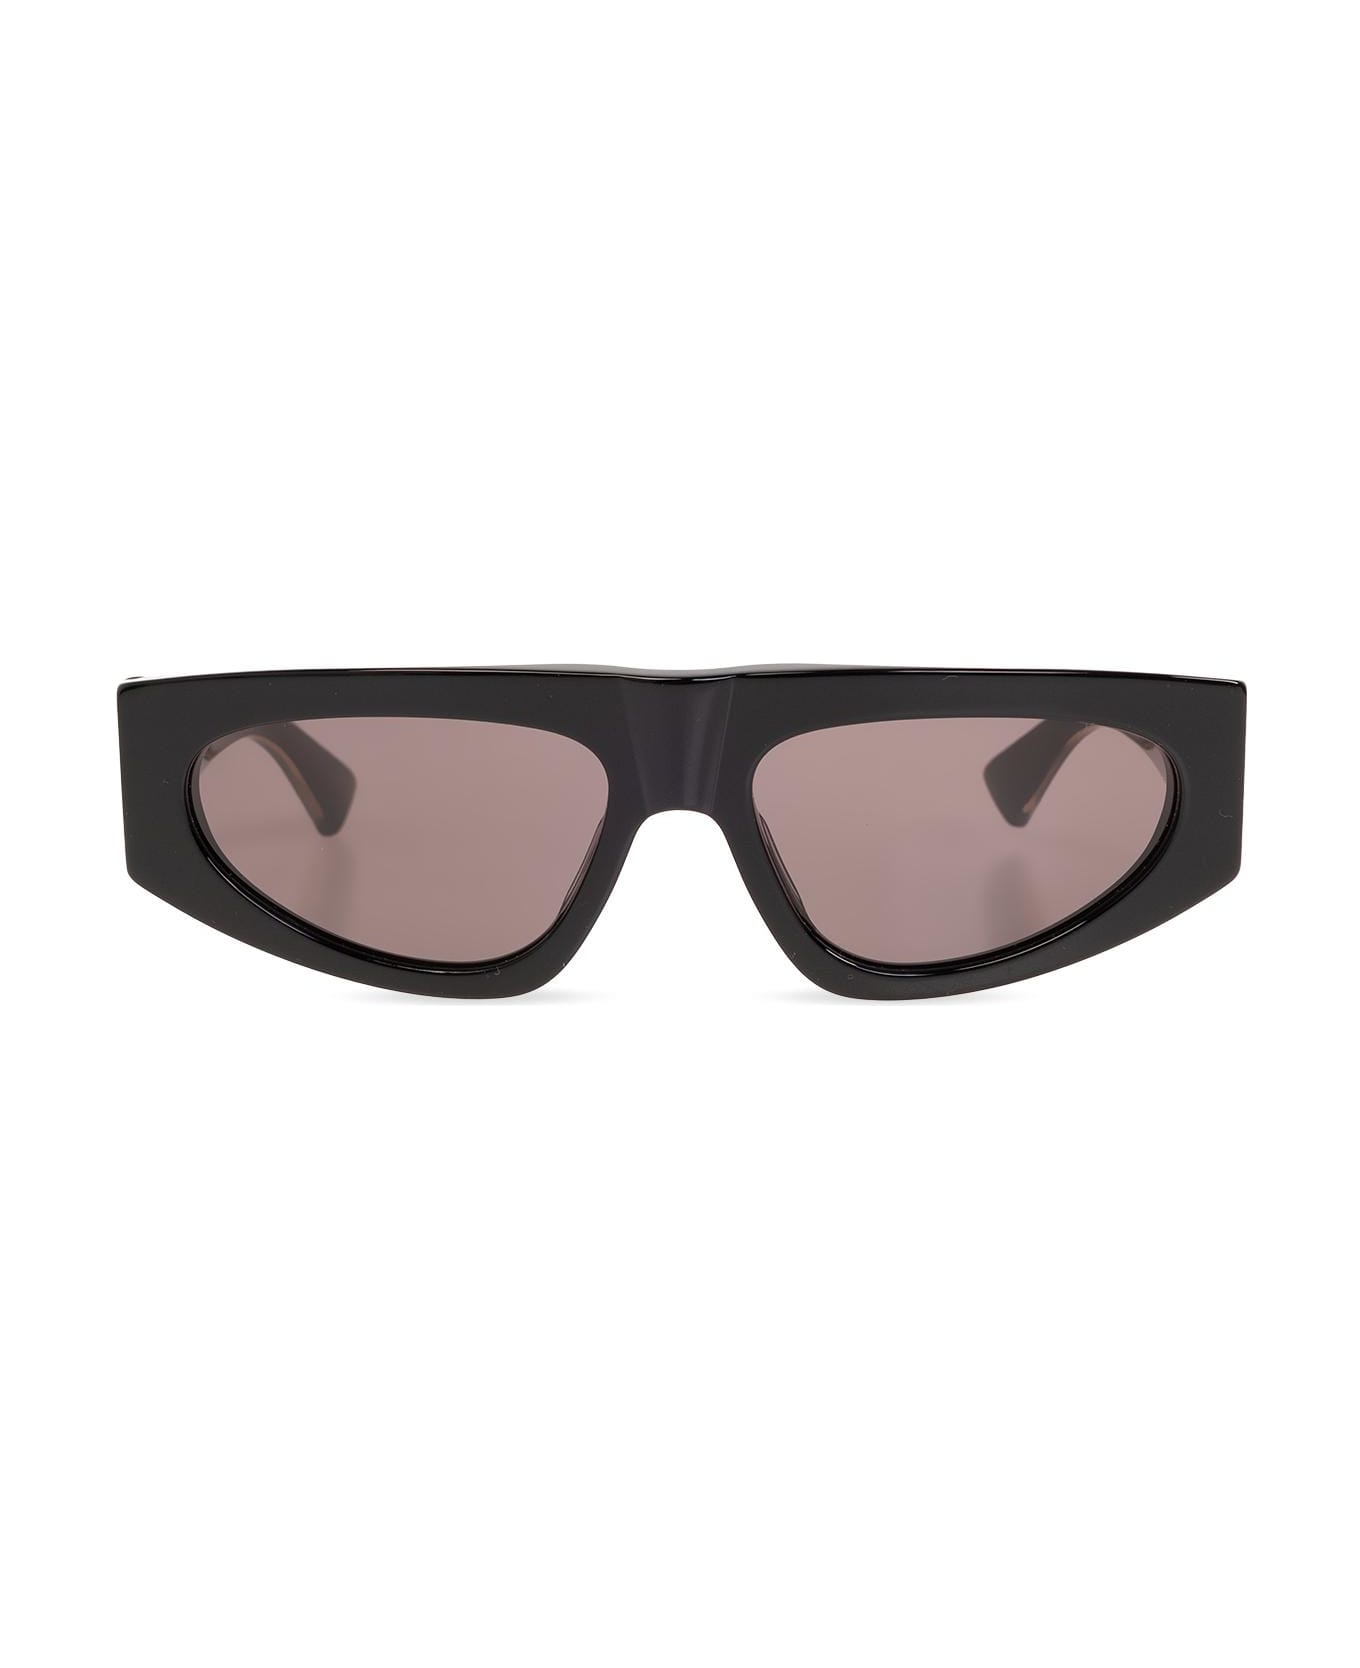 Bottega Veneta Sunglasses - Black Crystal Grey